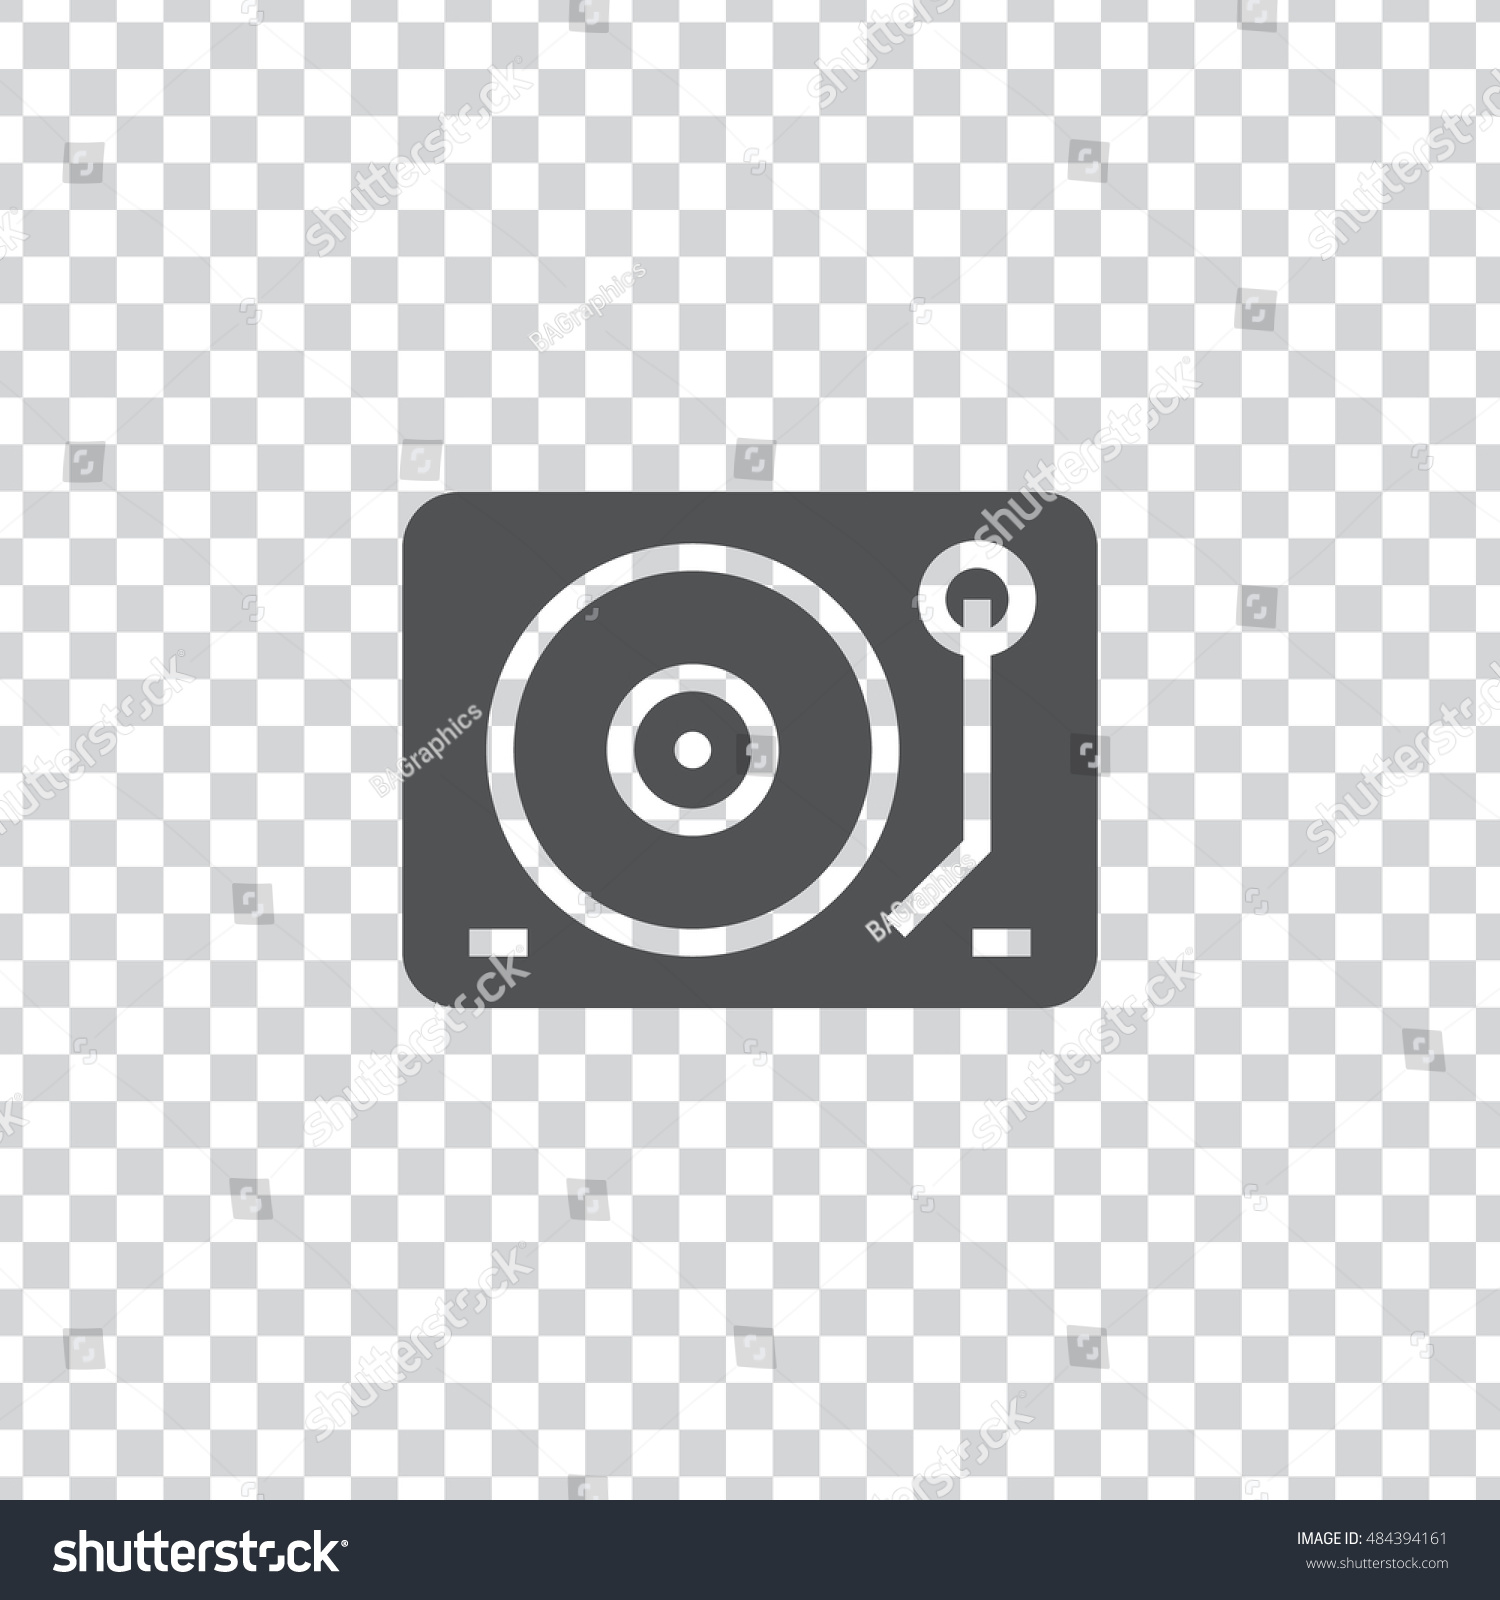 Free Dj mixer icon Vector Image - 1529003 | StockUnlimited